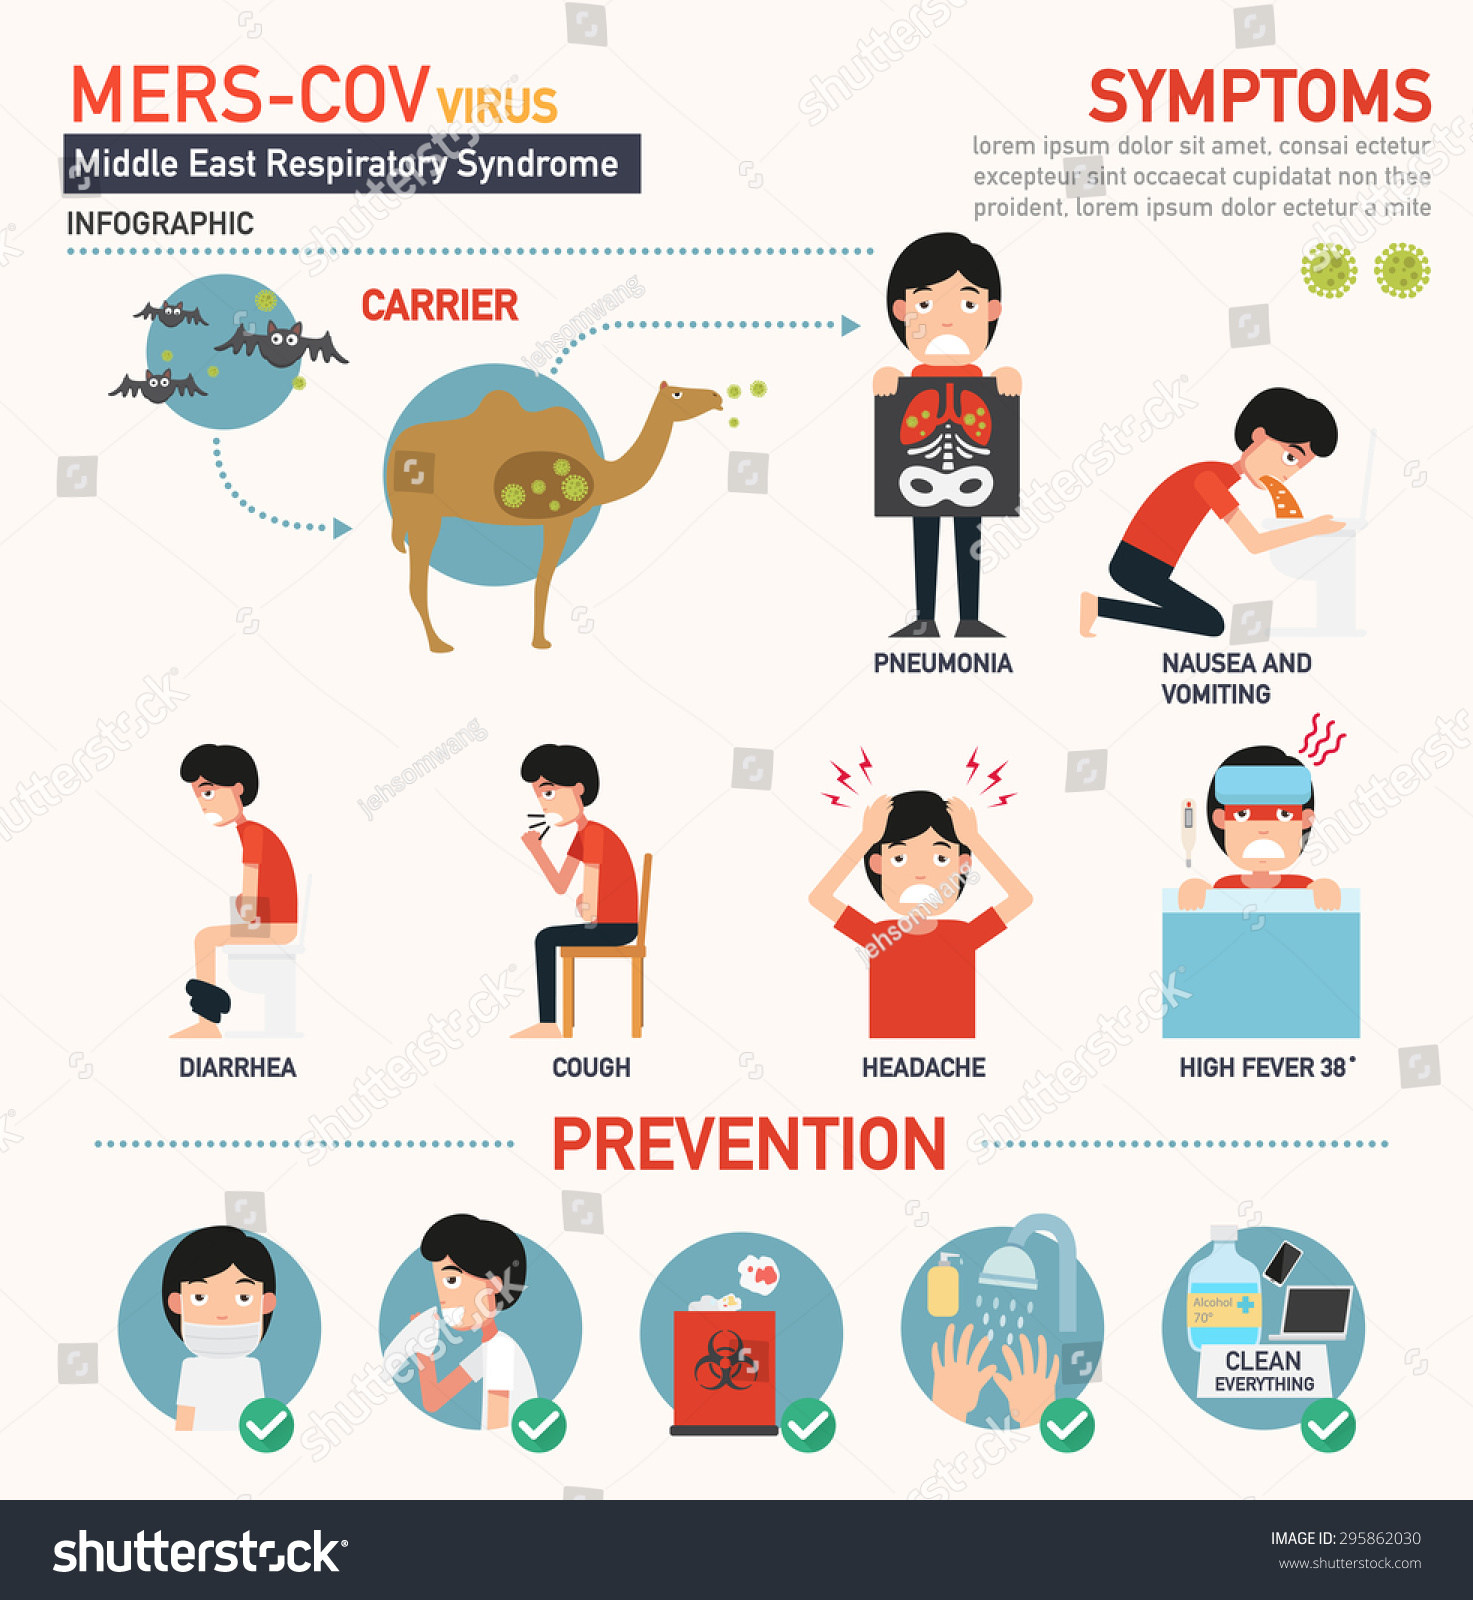 Merscov Middle East Respiratory Syndrome Coronavirus Stock Vector 295862030 - Shutterstock